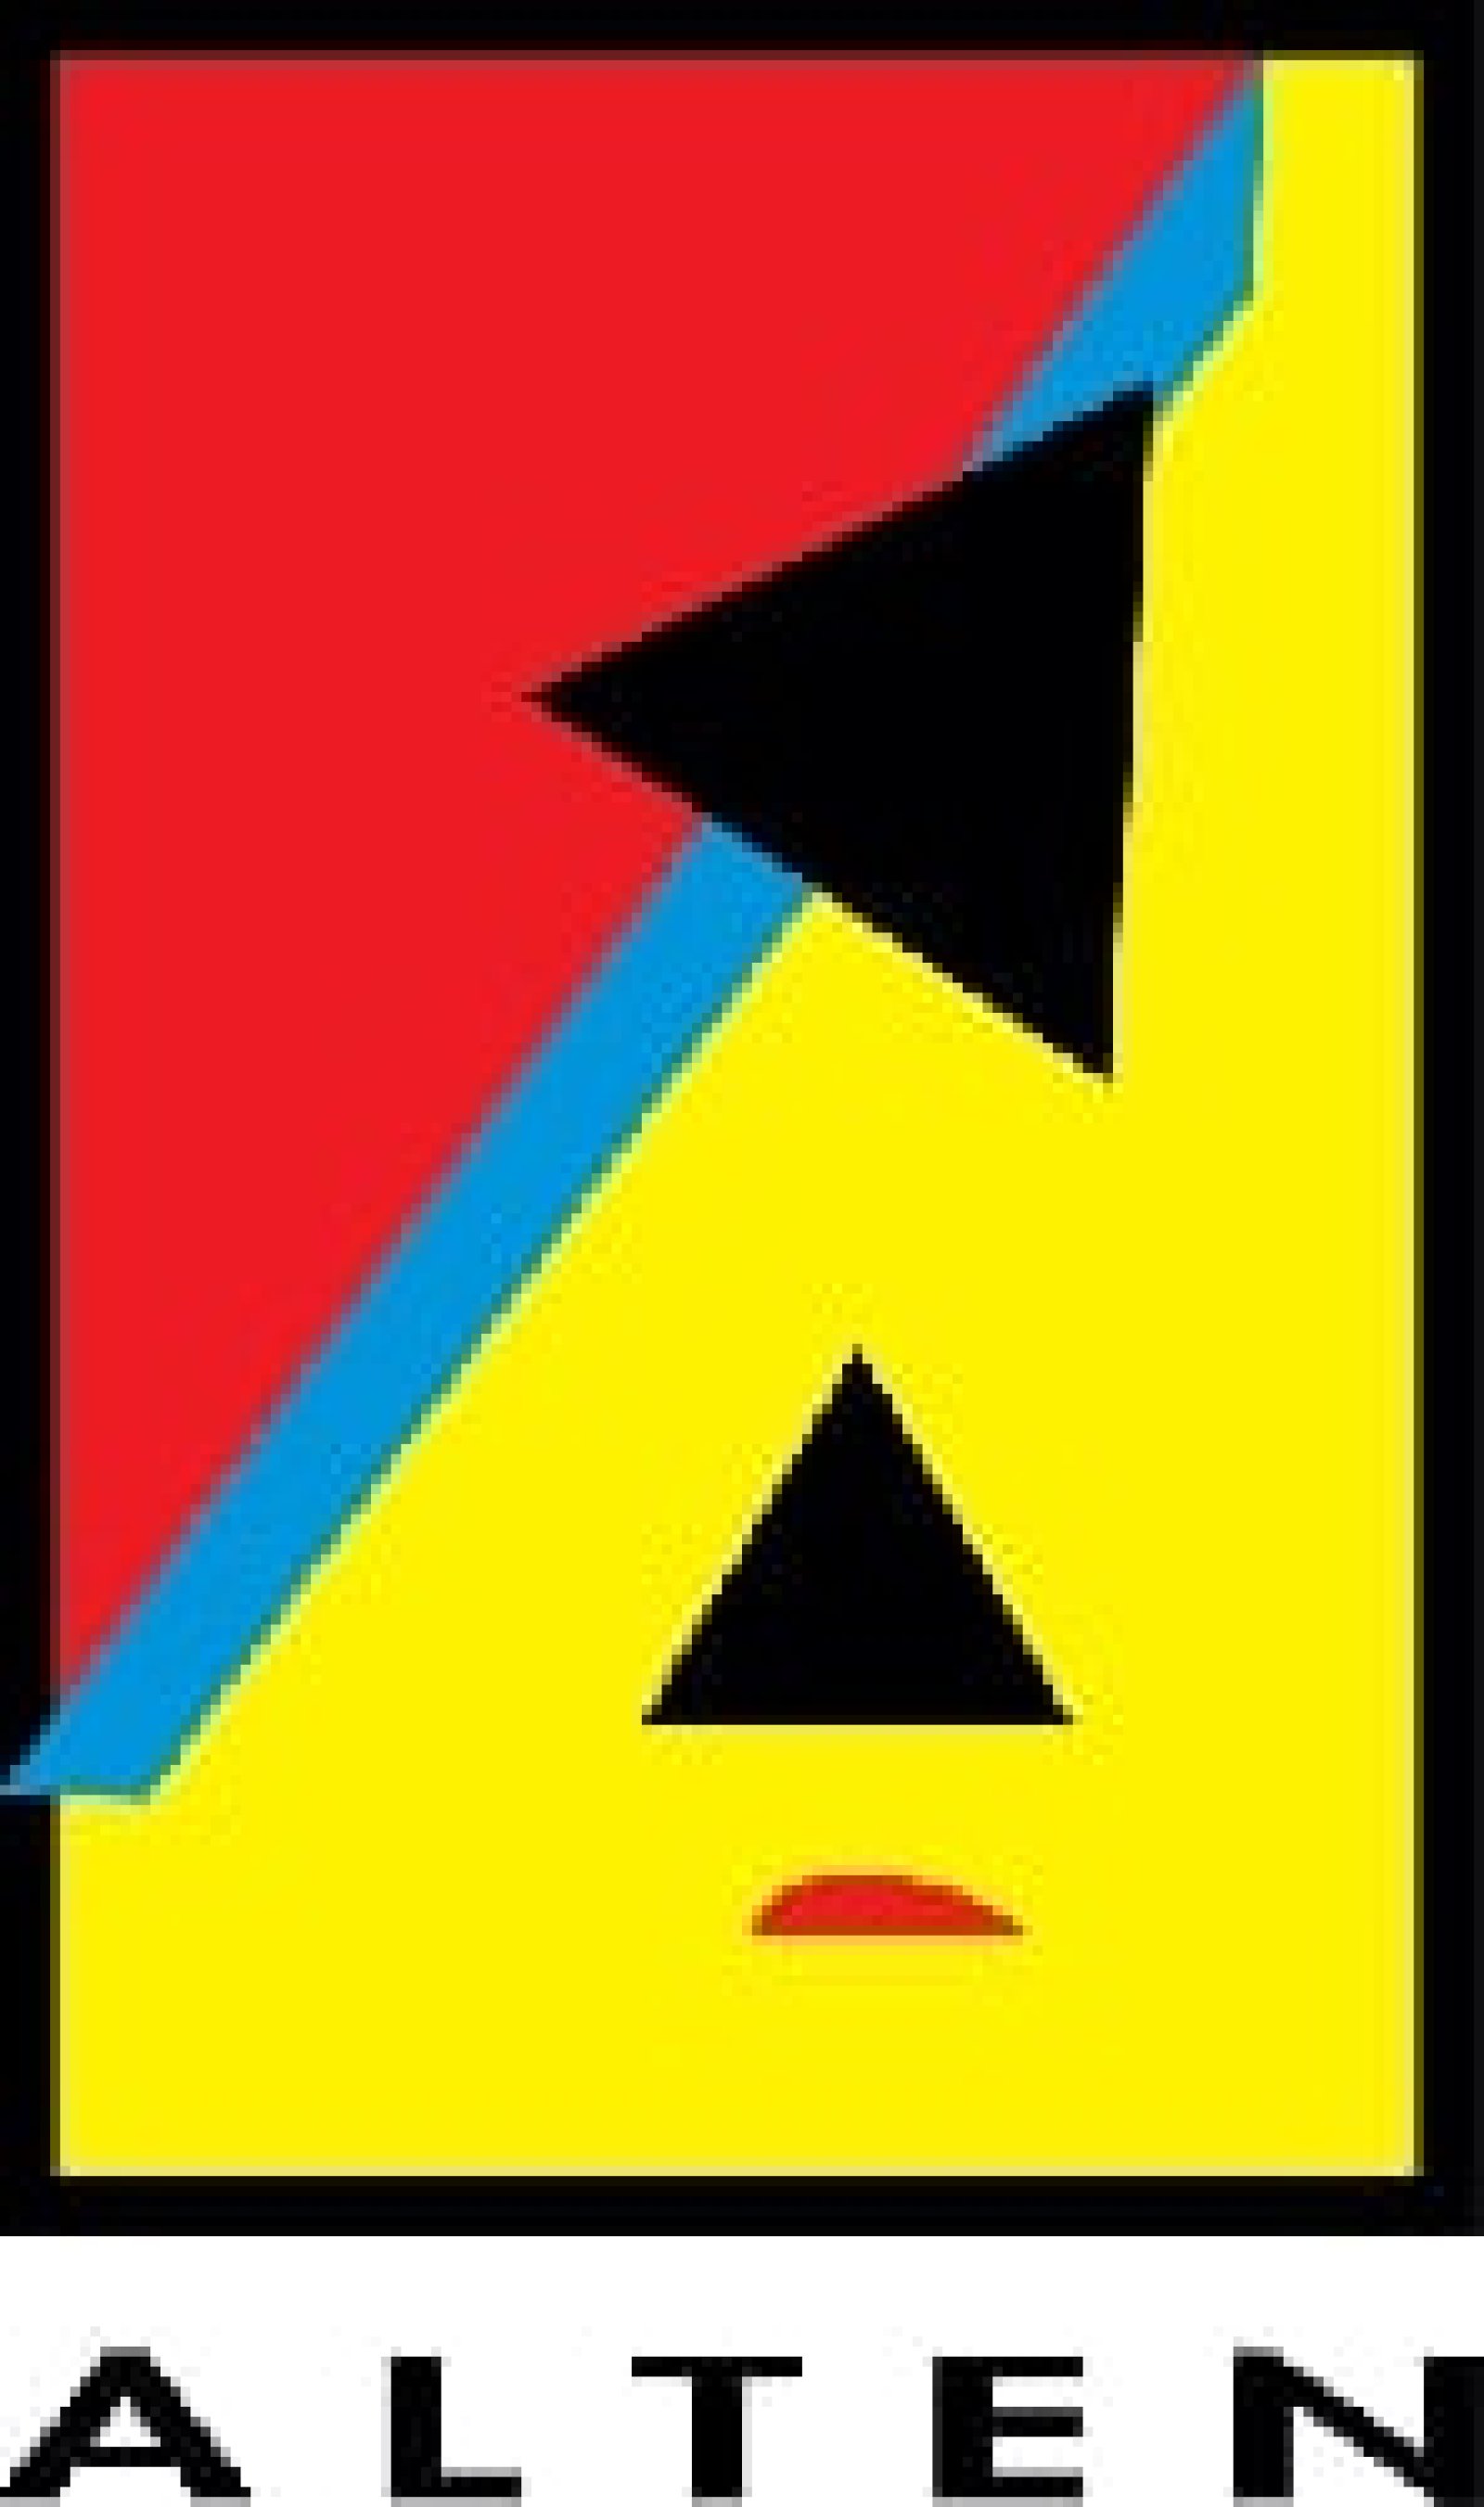 Logo ALTEN Italia